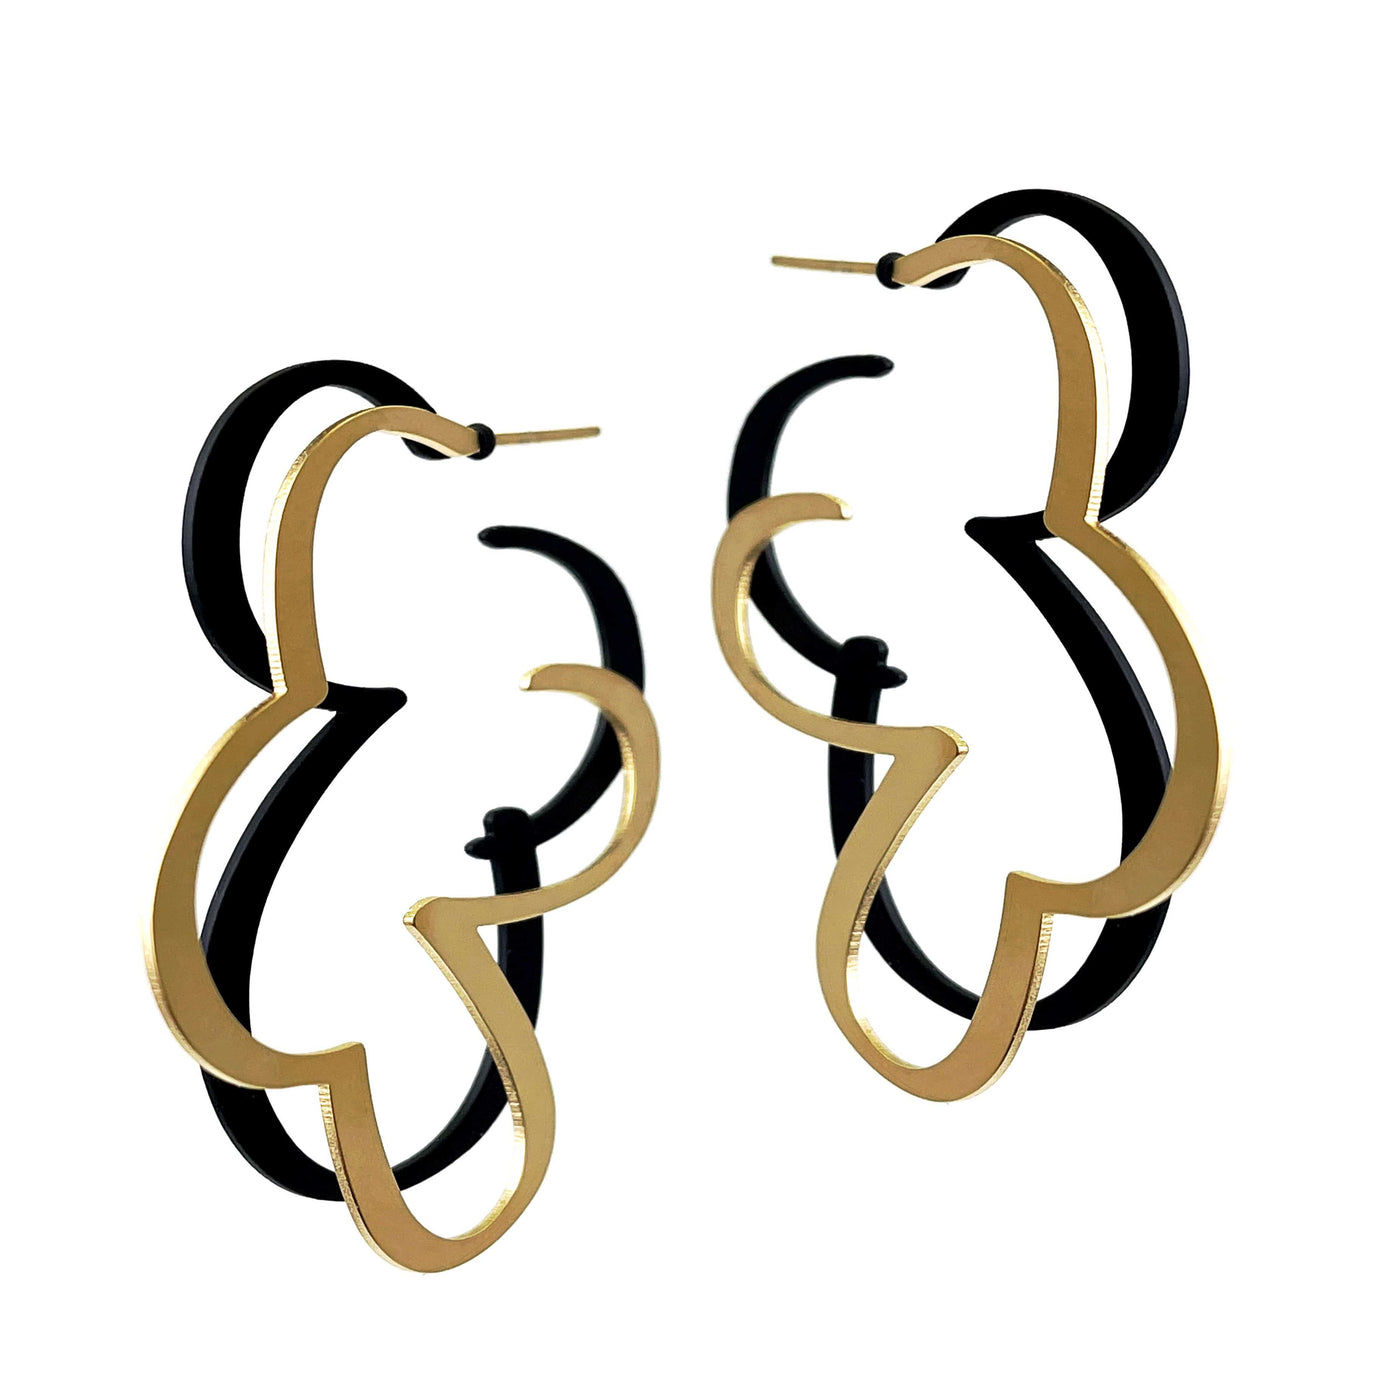 X2 Puff Hoop Earrings - Raw/ Gold - inSync design